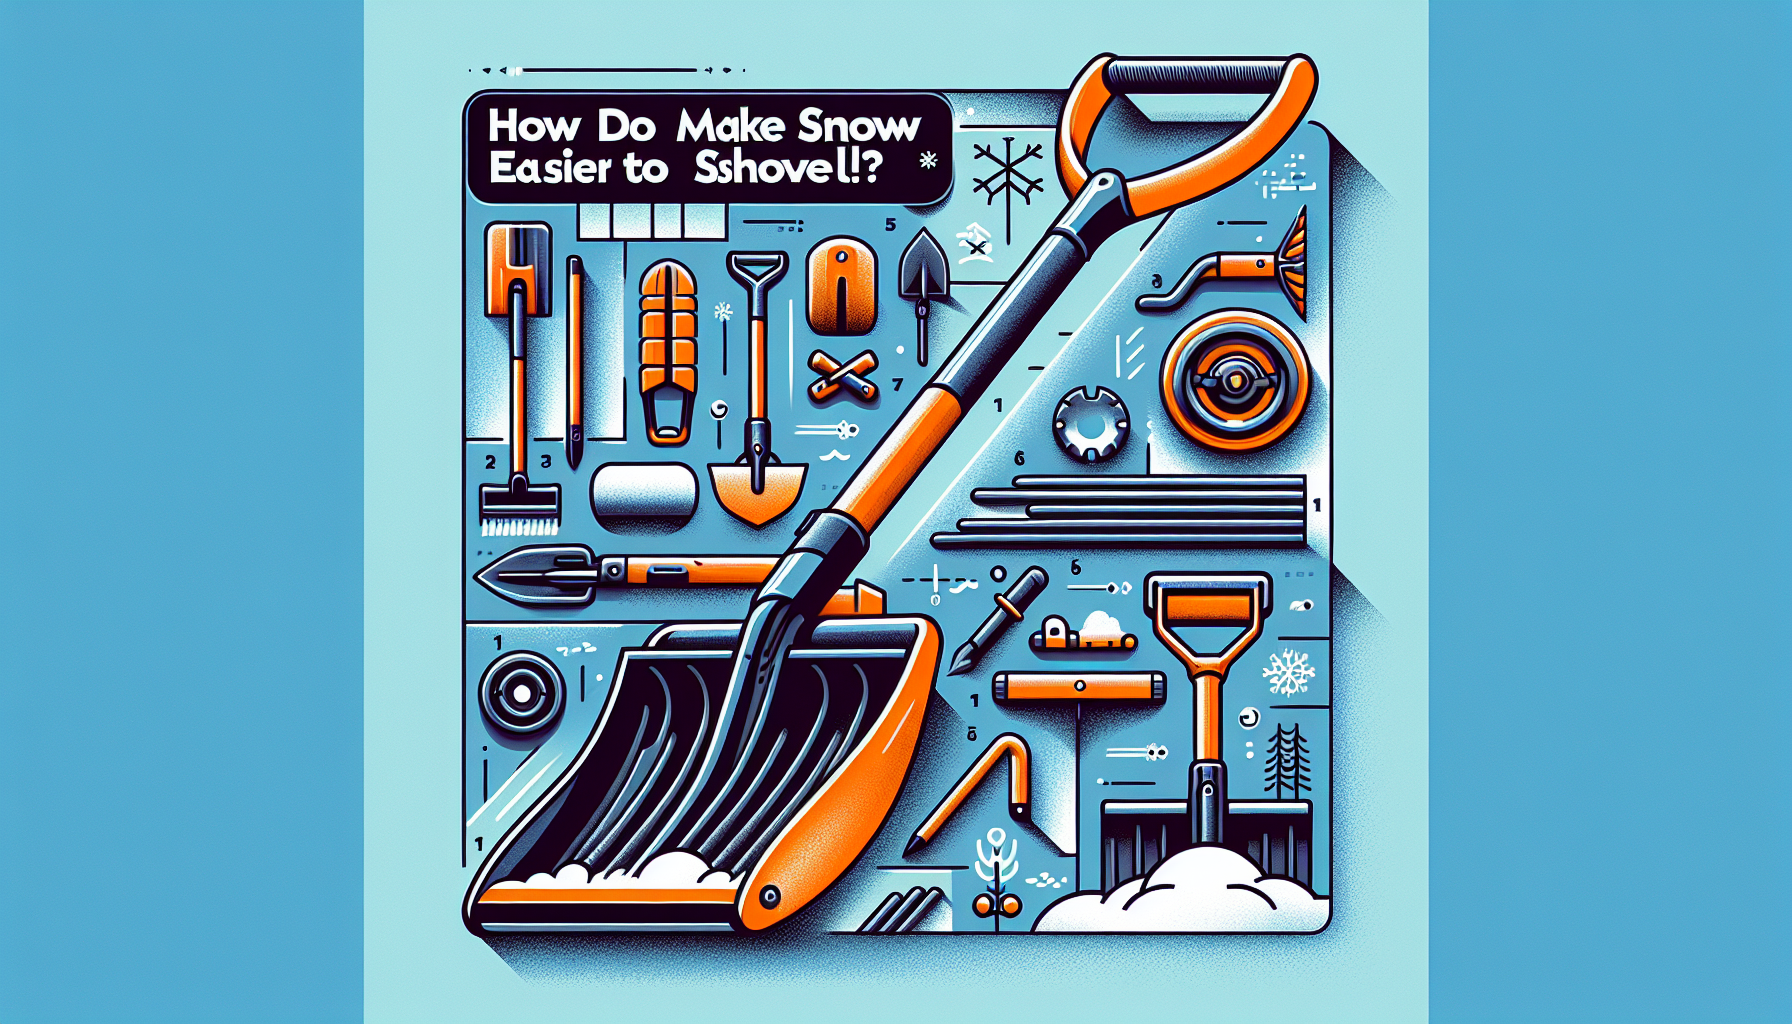 How Do You Make Snow Easier To Shovel?